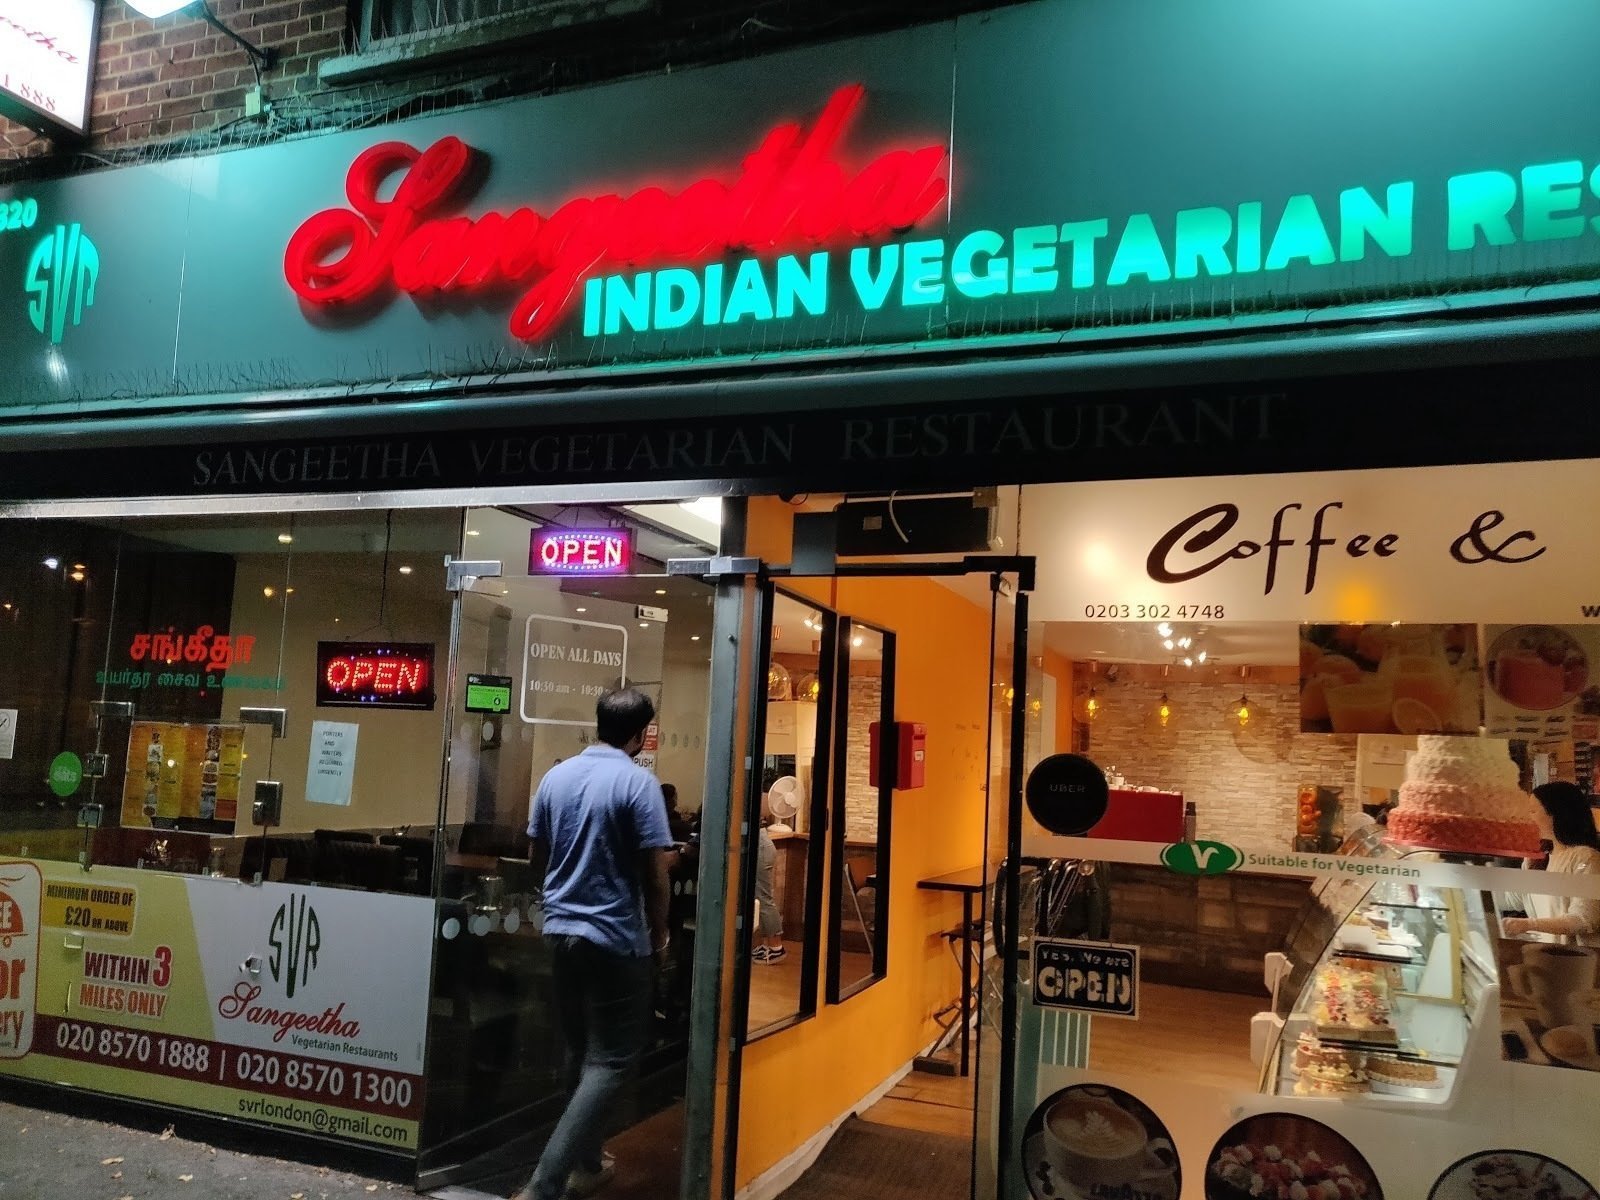 <span class="translation_missing" title="translation missing: en.meta.location_title, location_name: Sangeetha Vegetarian Restaurant, city: London">Location Title</span>